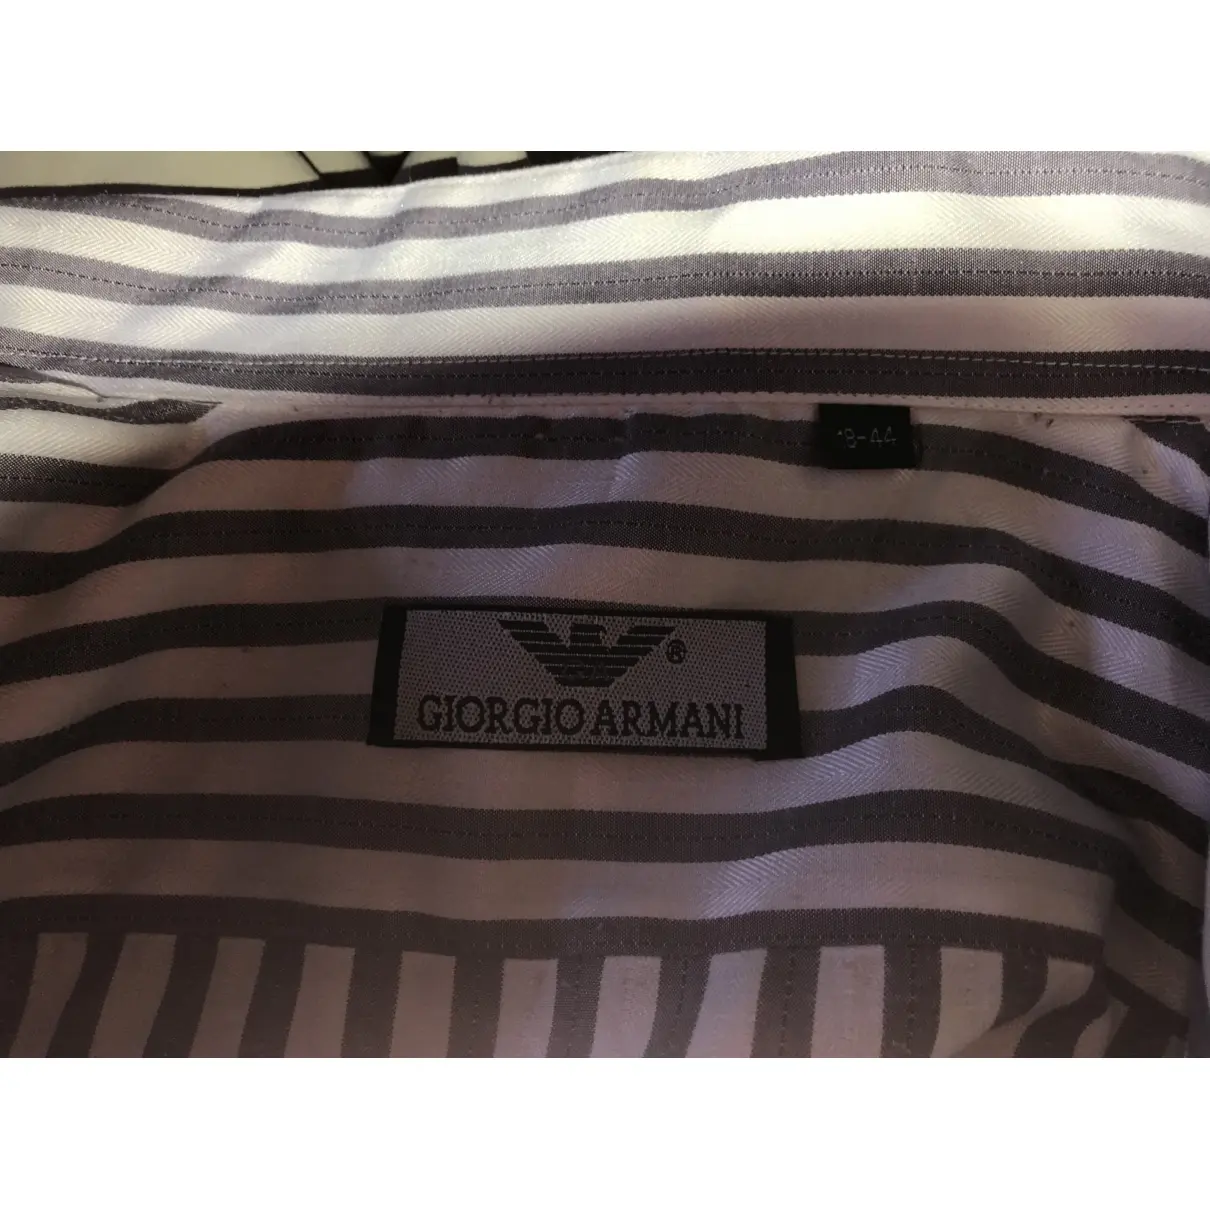 Buy Giorgio Armani Shirt online - Vintage